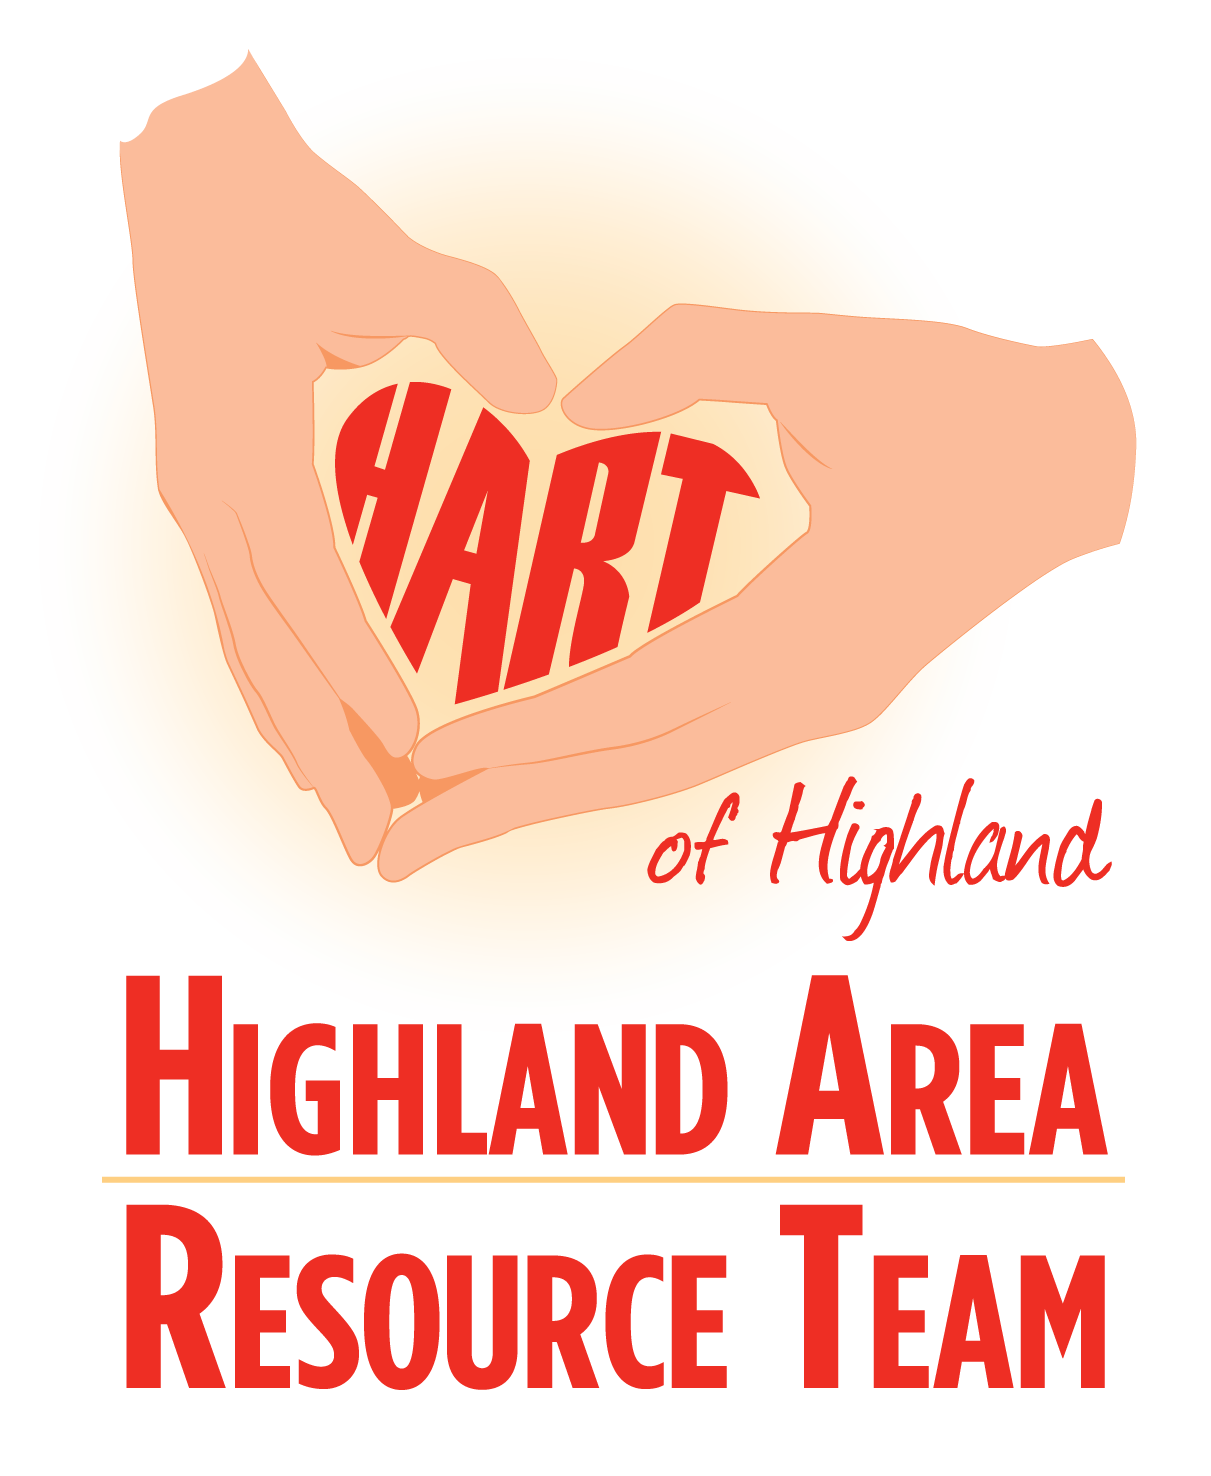 HART of Highland